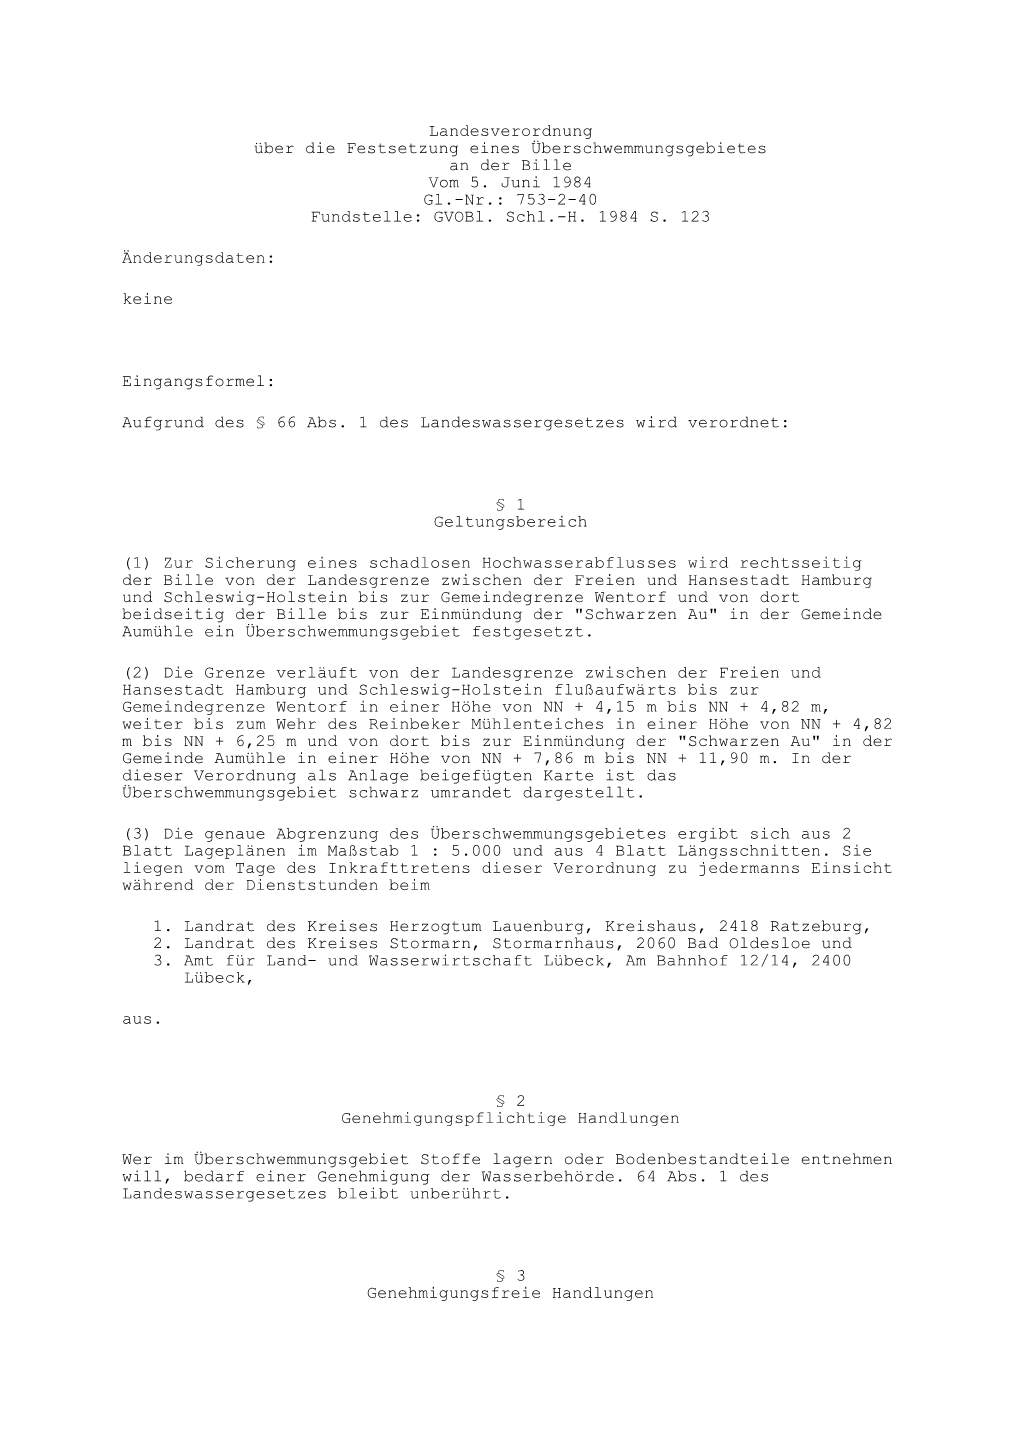 ÜSG Bille Landesverordnung 05.06.1984